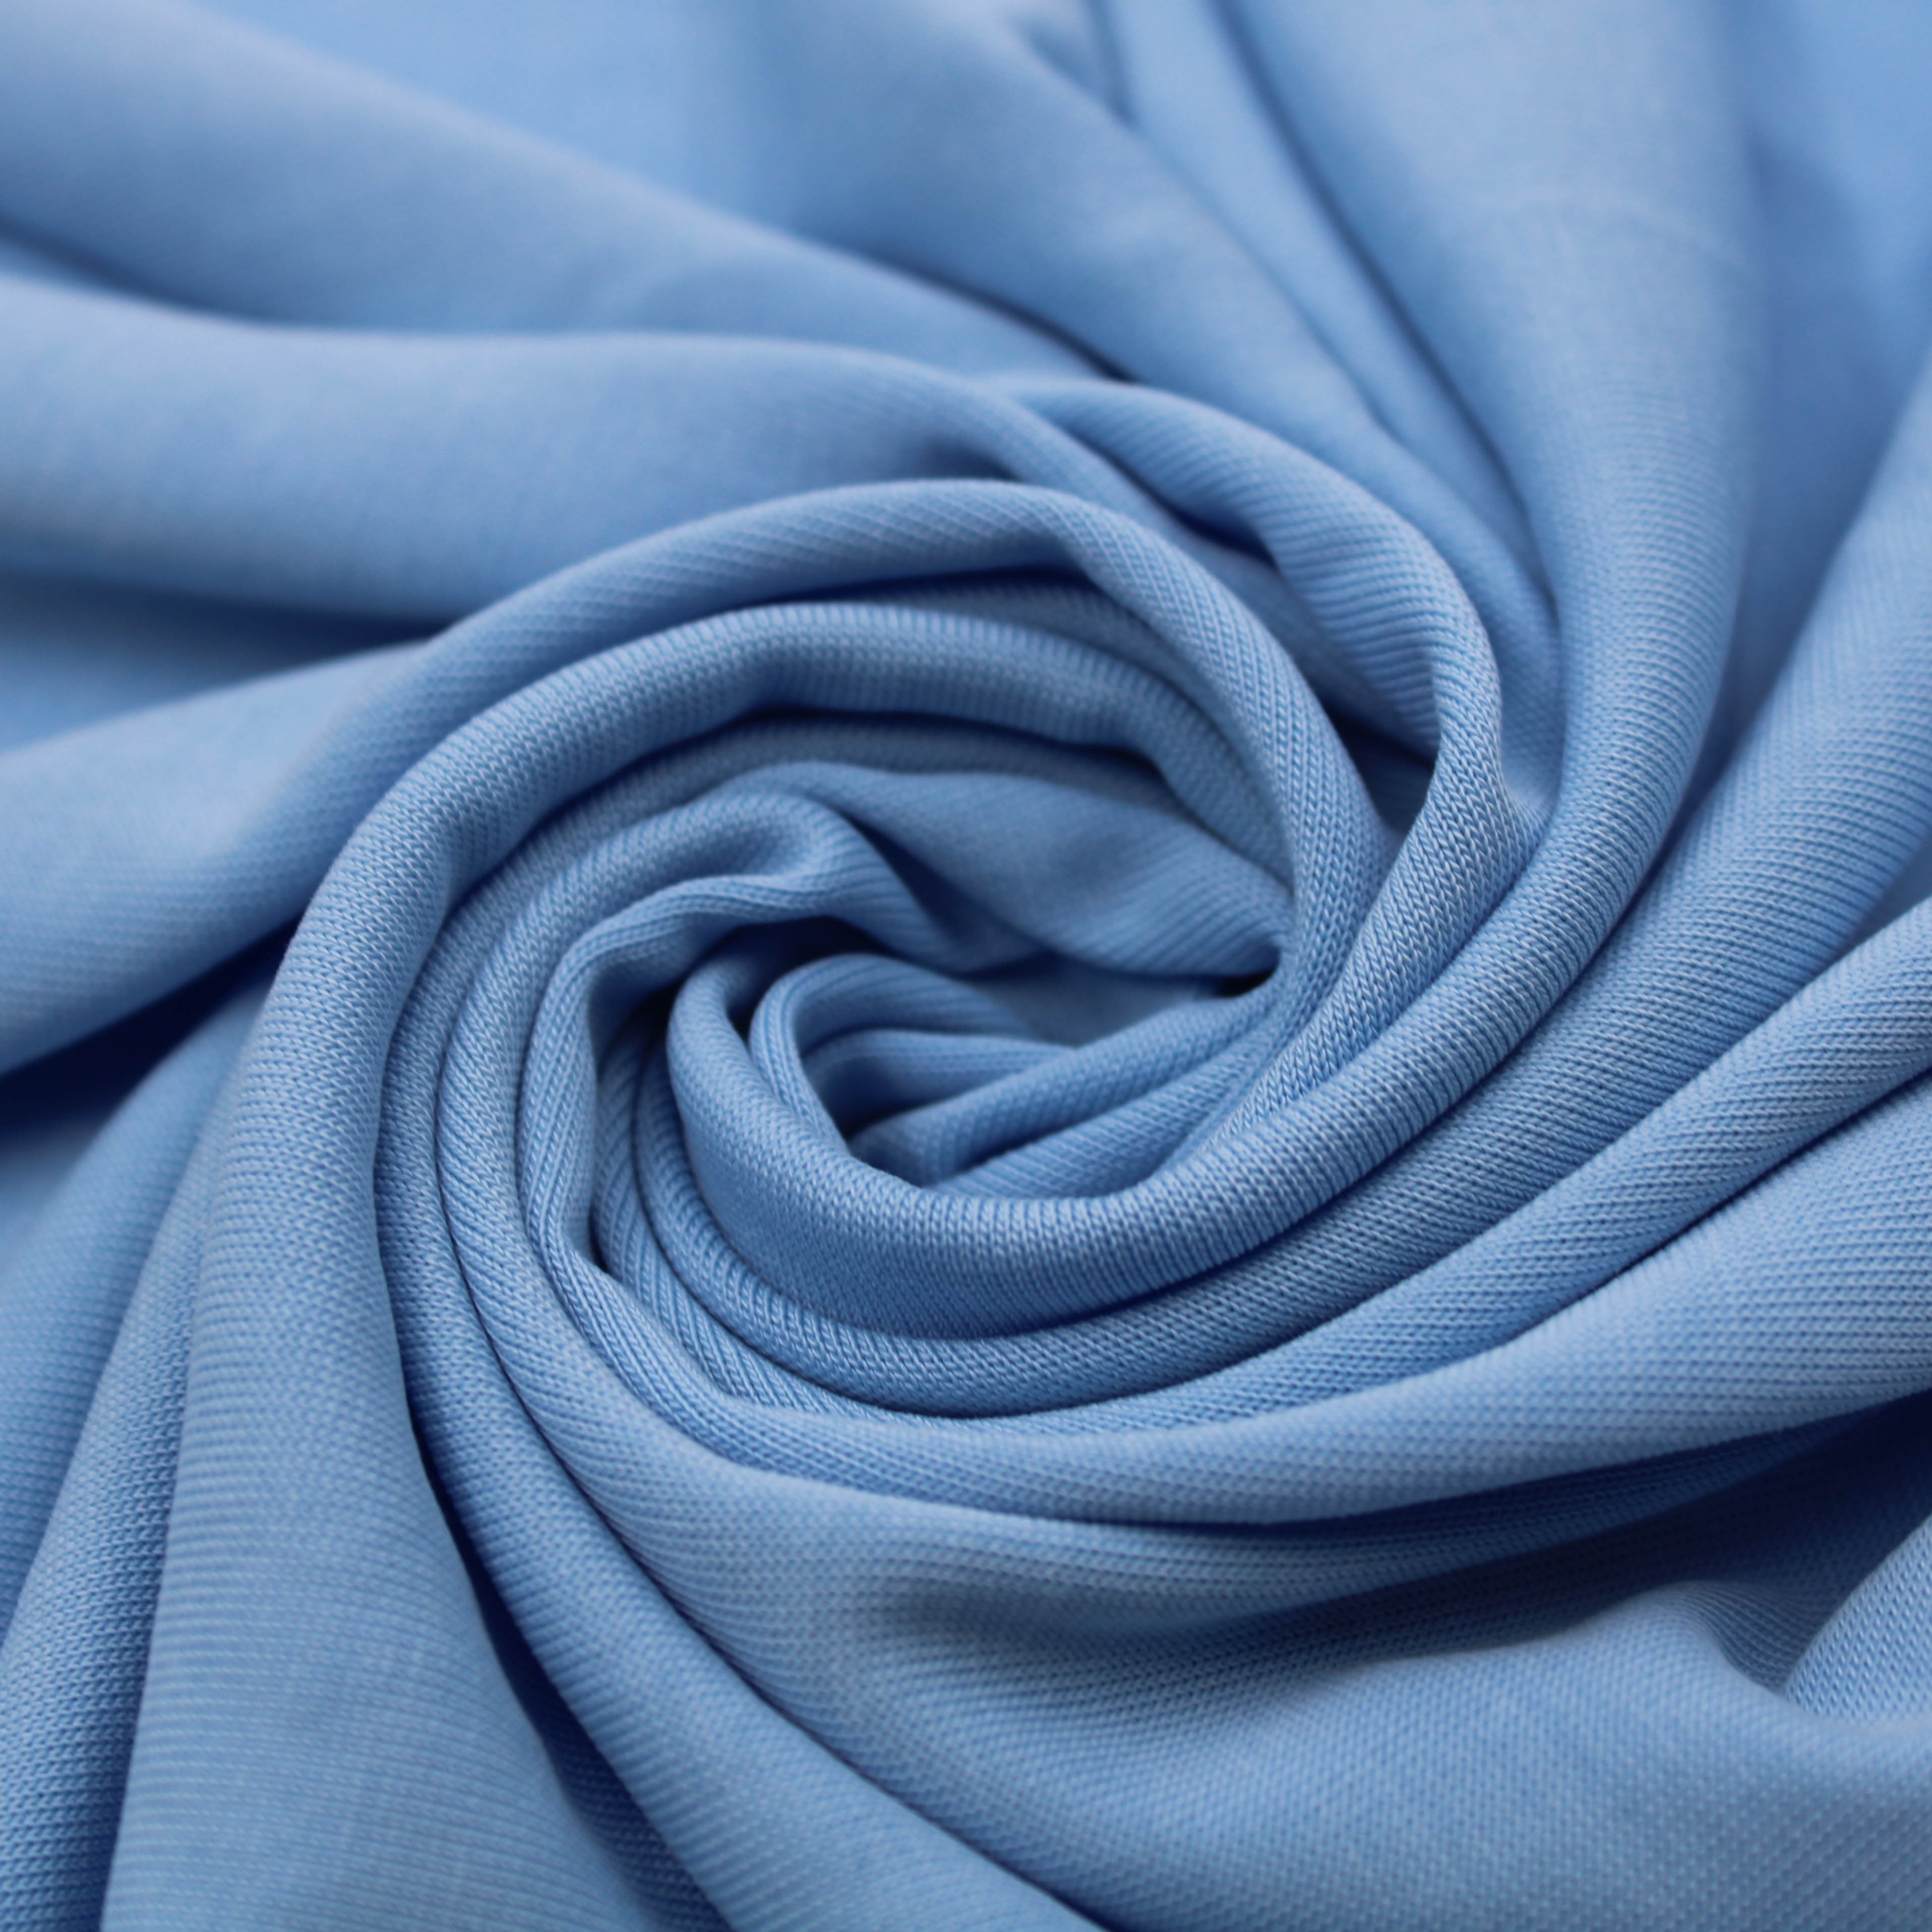 Winter Blue Slub-Like Texture Jersey Knit Fabric, Fabric By The Yard